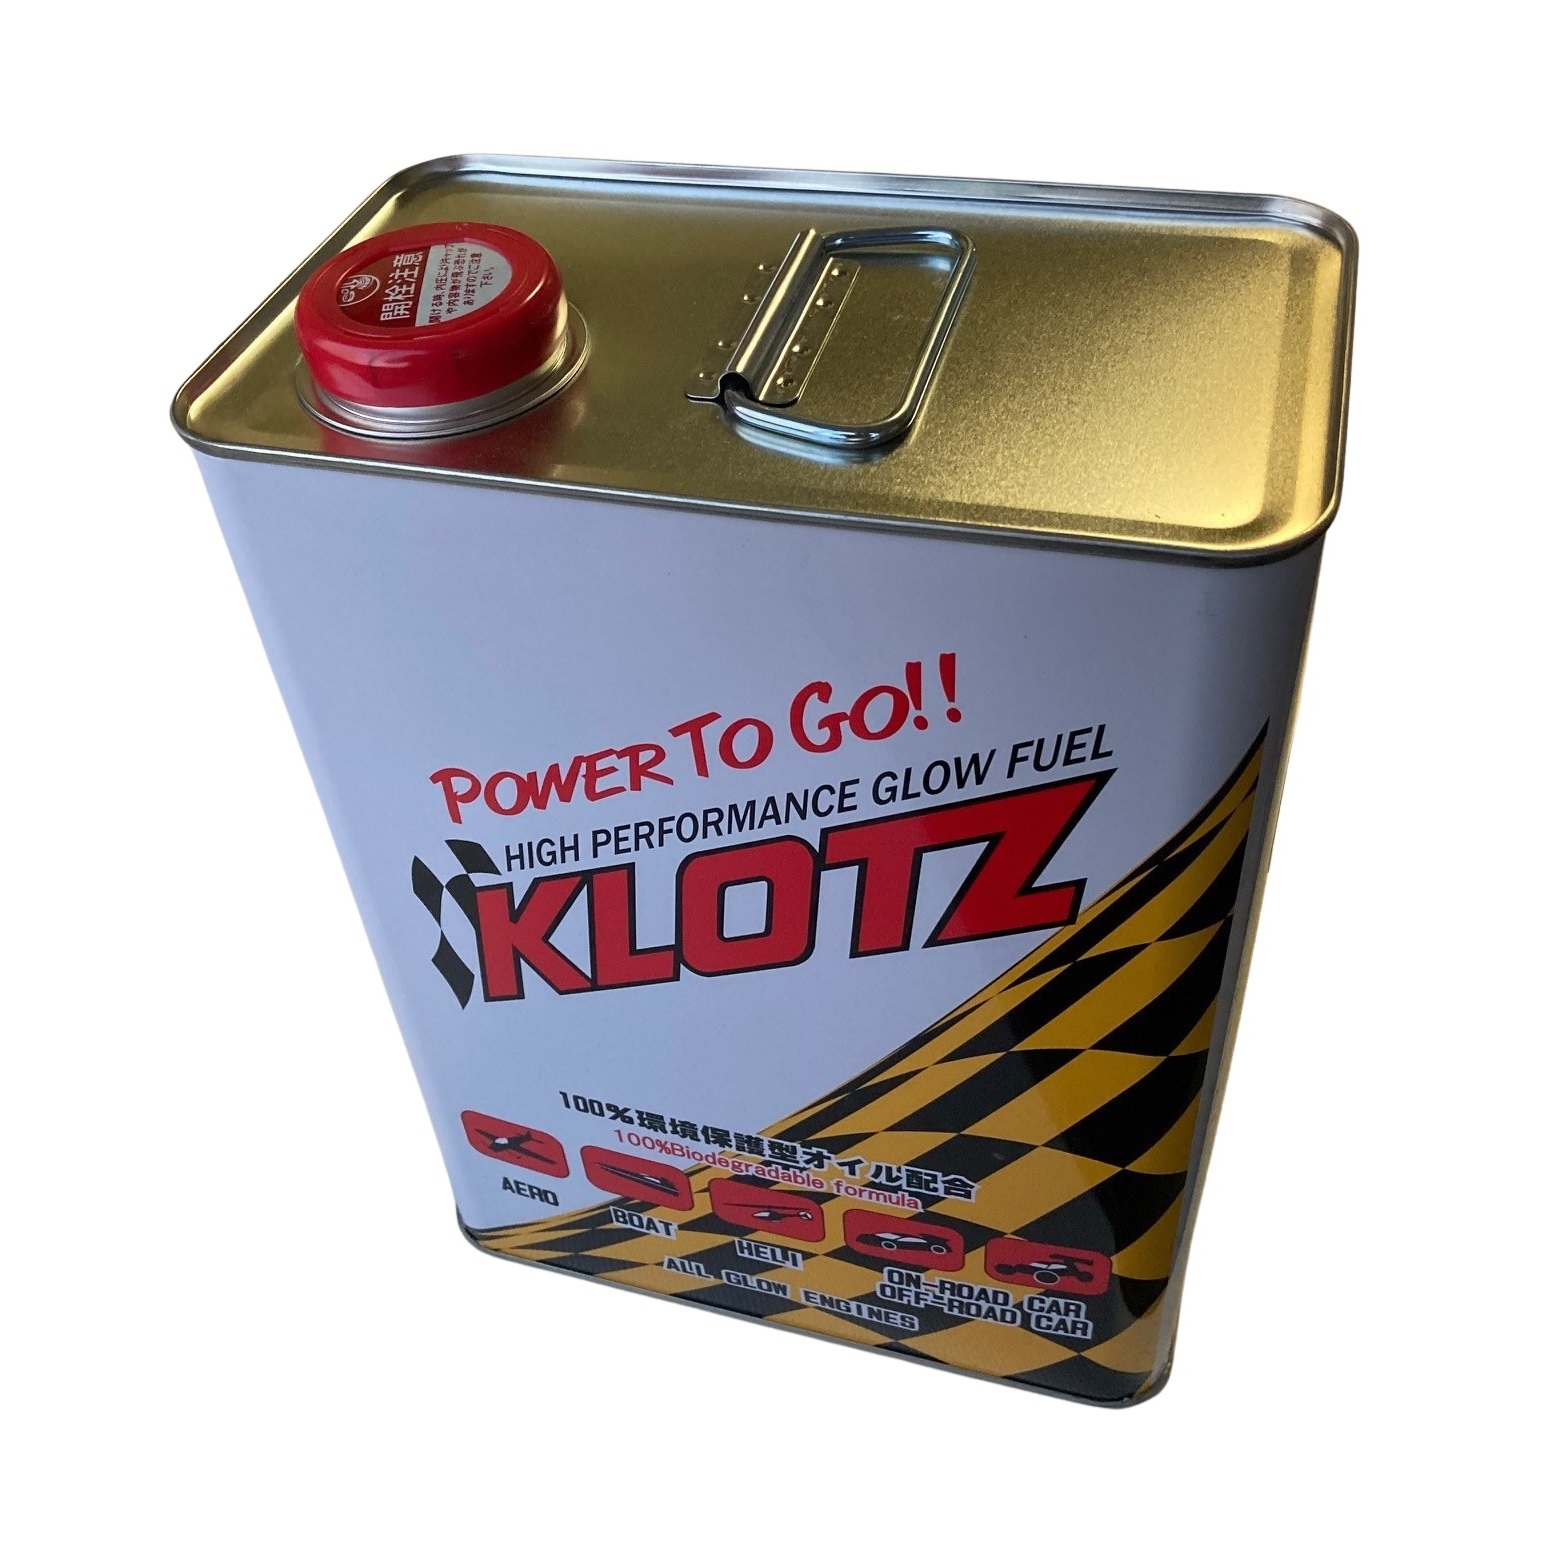 KLOTZ グロー燃料 エアースペシャル15 4L